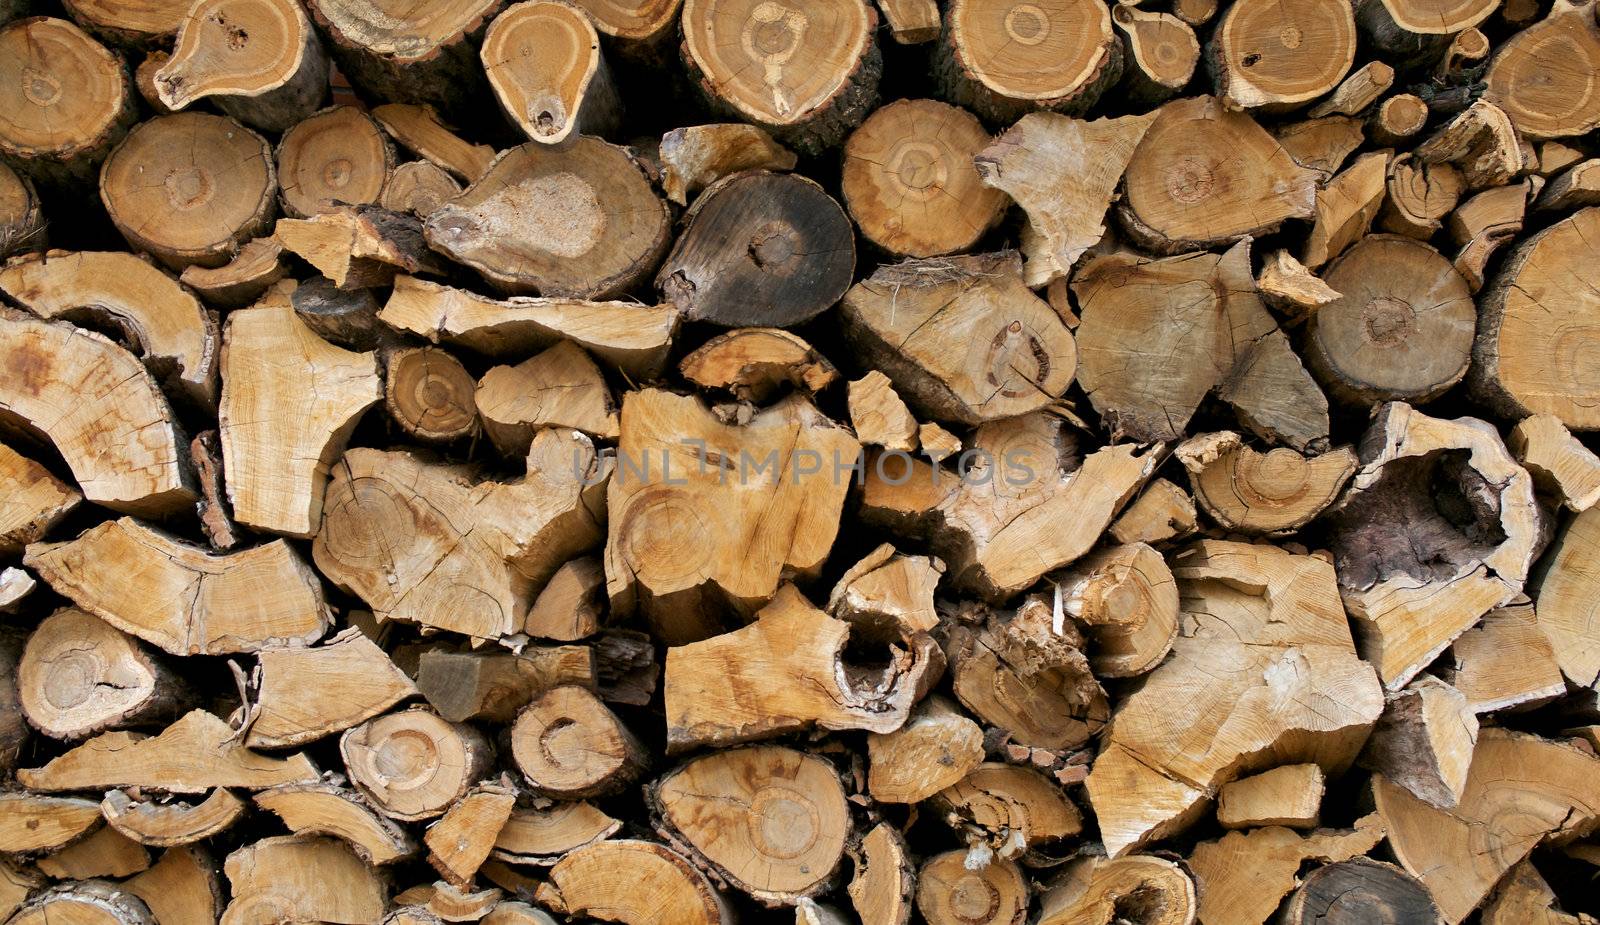 Background of Firewood by zhekos